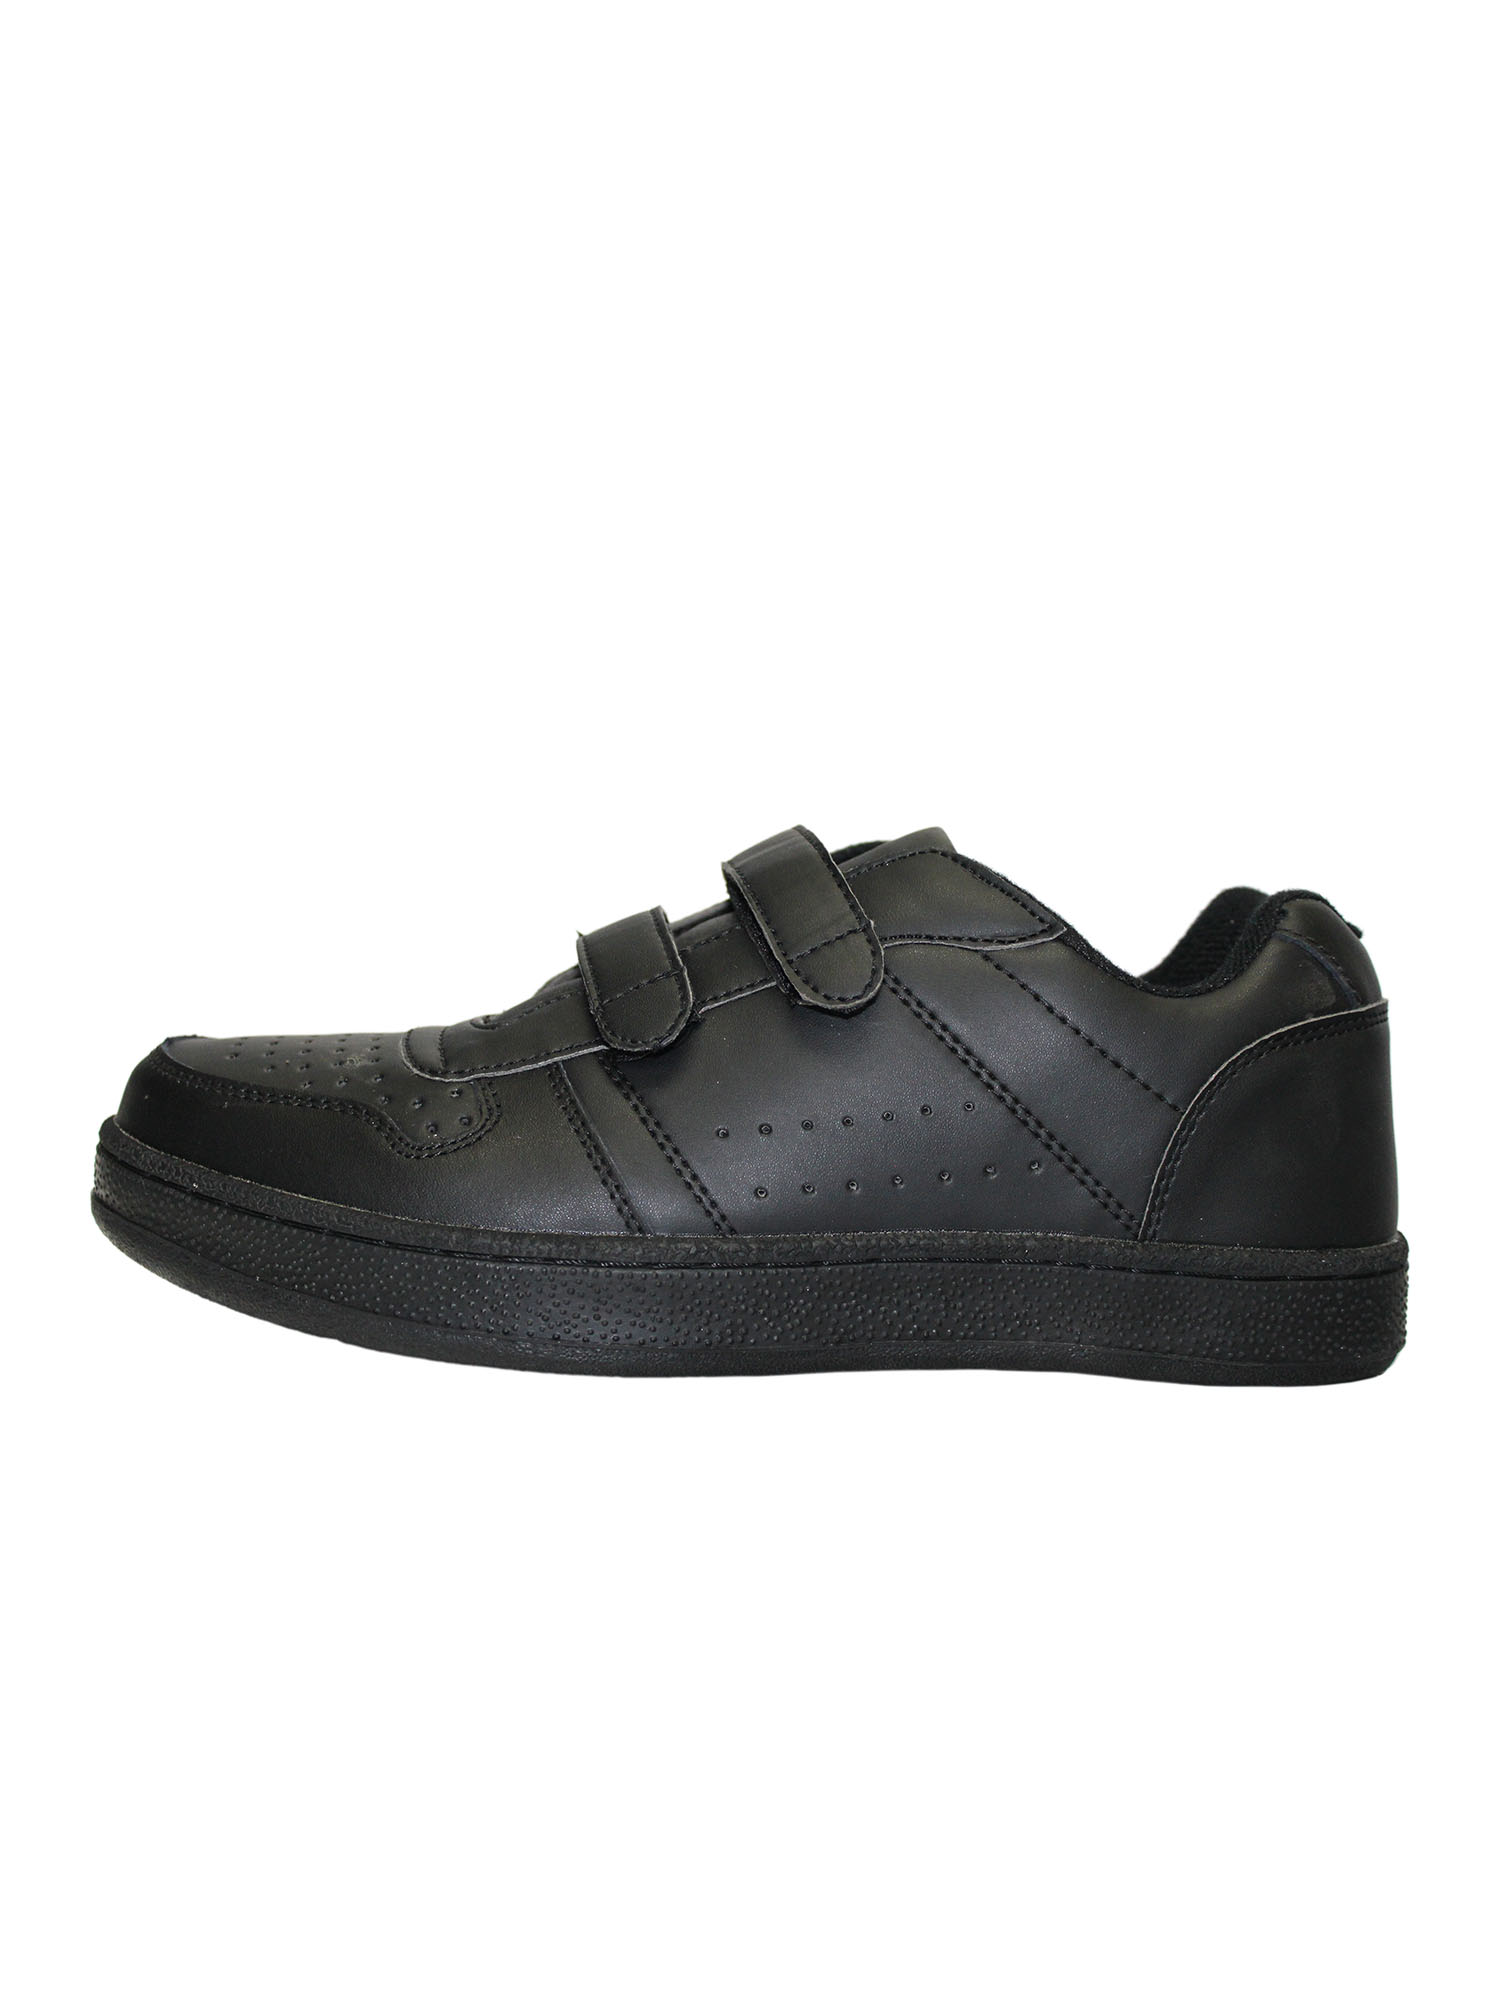 Tanleewa Men's Leather Strap Sneakers Lightweight Hook and Loop Walking Shoe Size 14 Adult Male - image 2 of 4